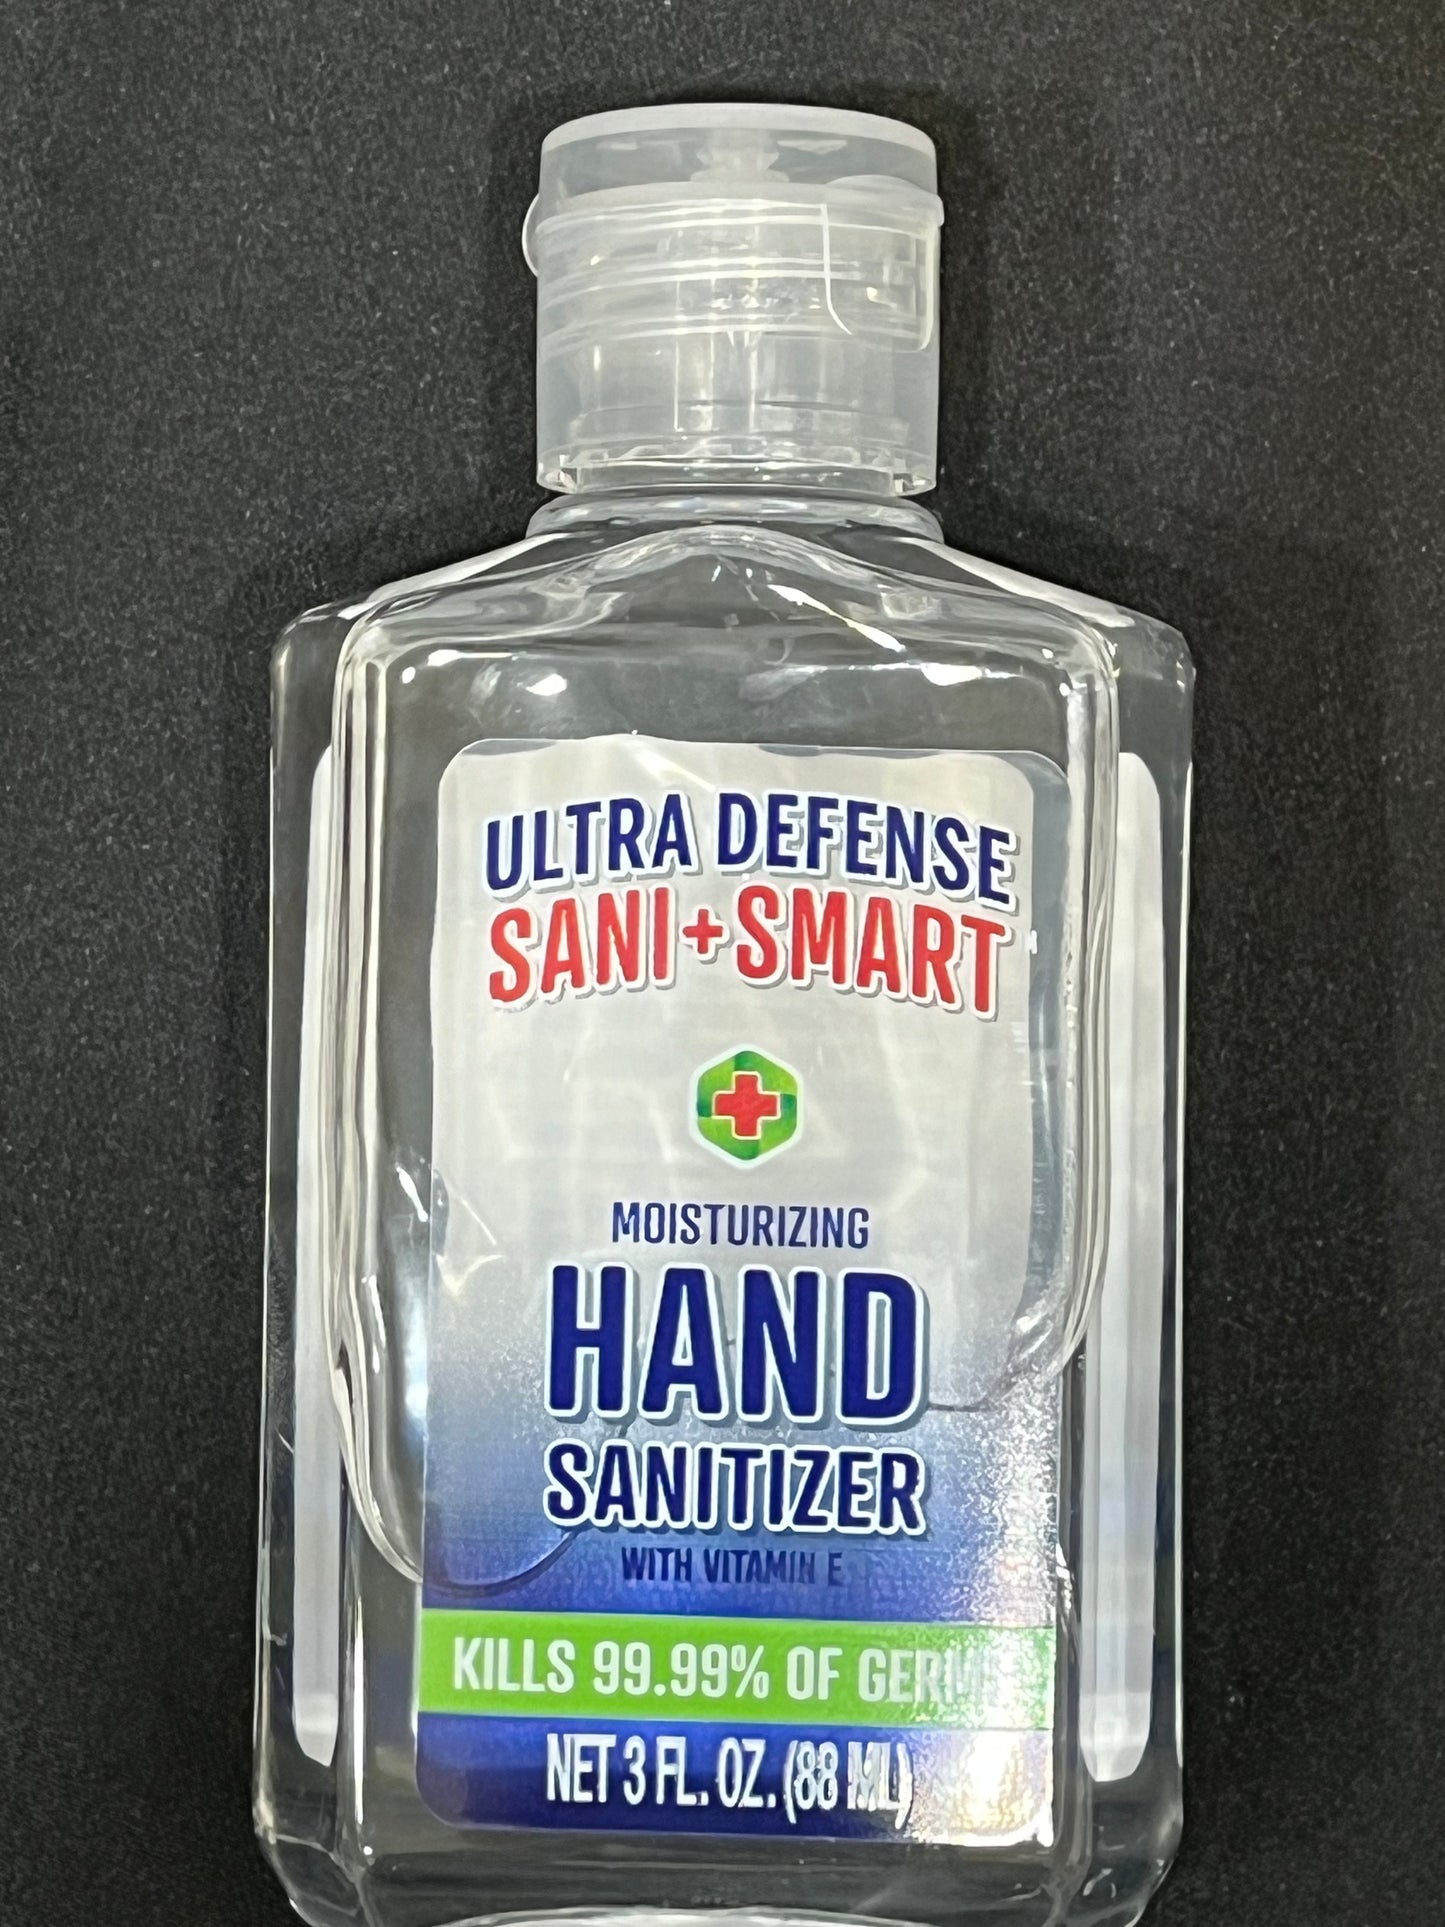 Uniites™ Ultra Defense Hand Sanitizer with Vitamin E, 1 bottle 3fl oz only $.91